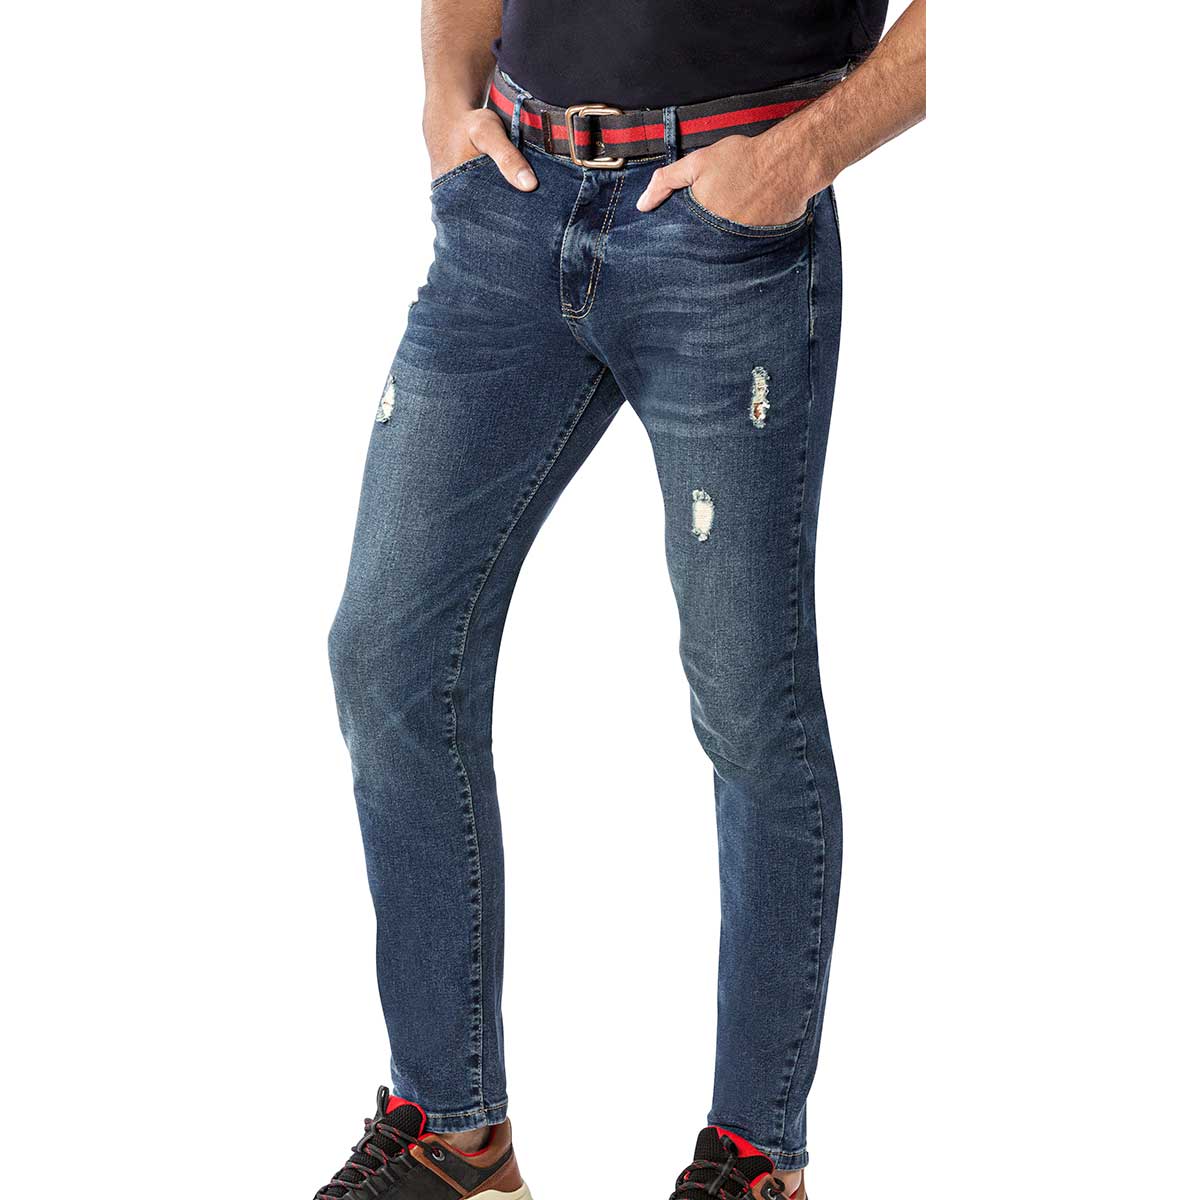 Pakar.com - Mayo: Regalos para mamá | Jeans para hombre cod-113237